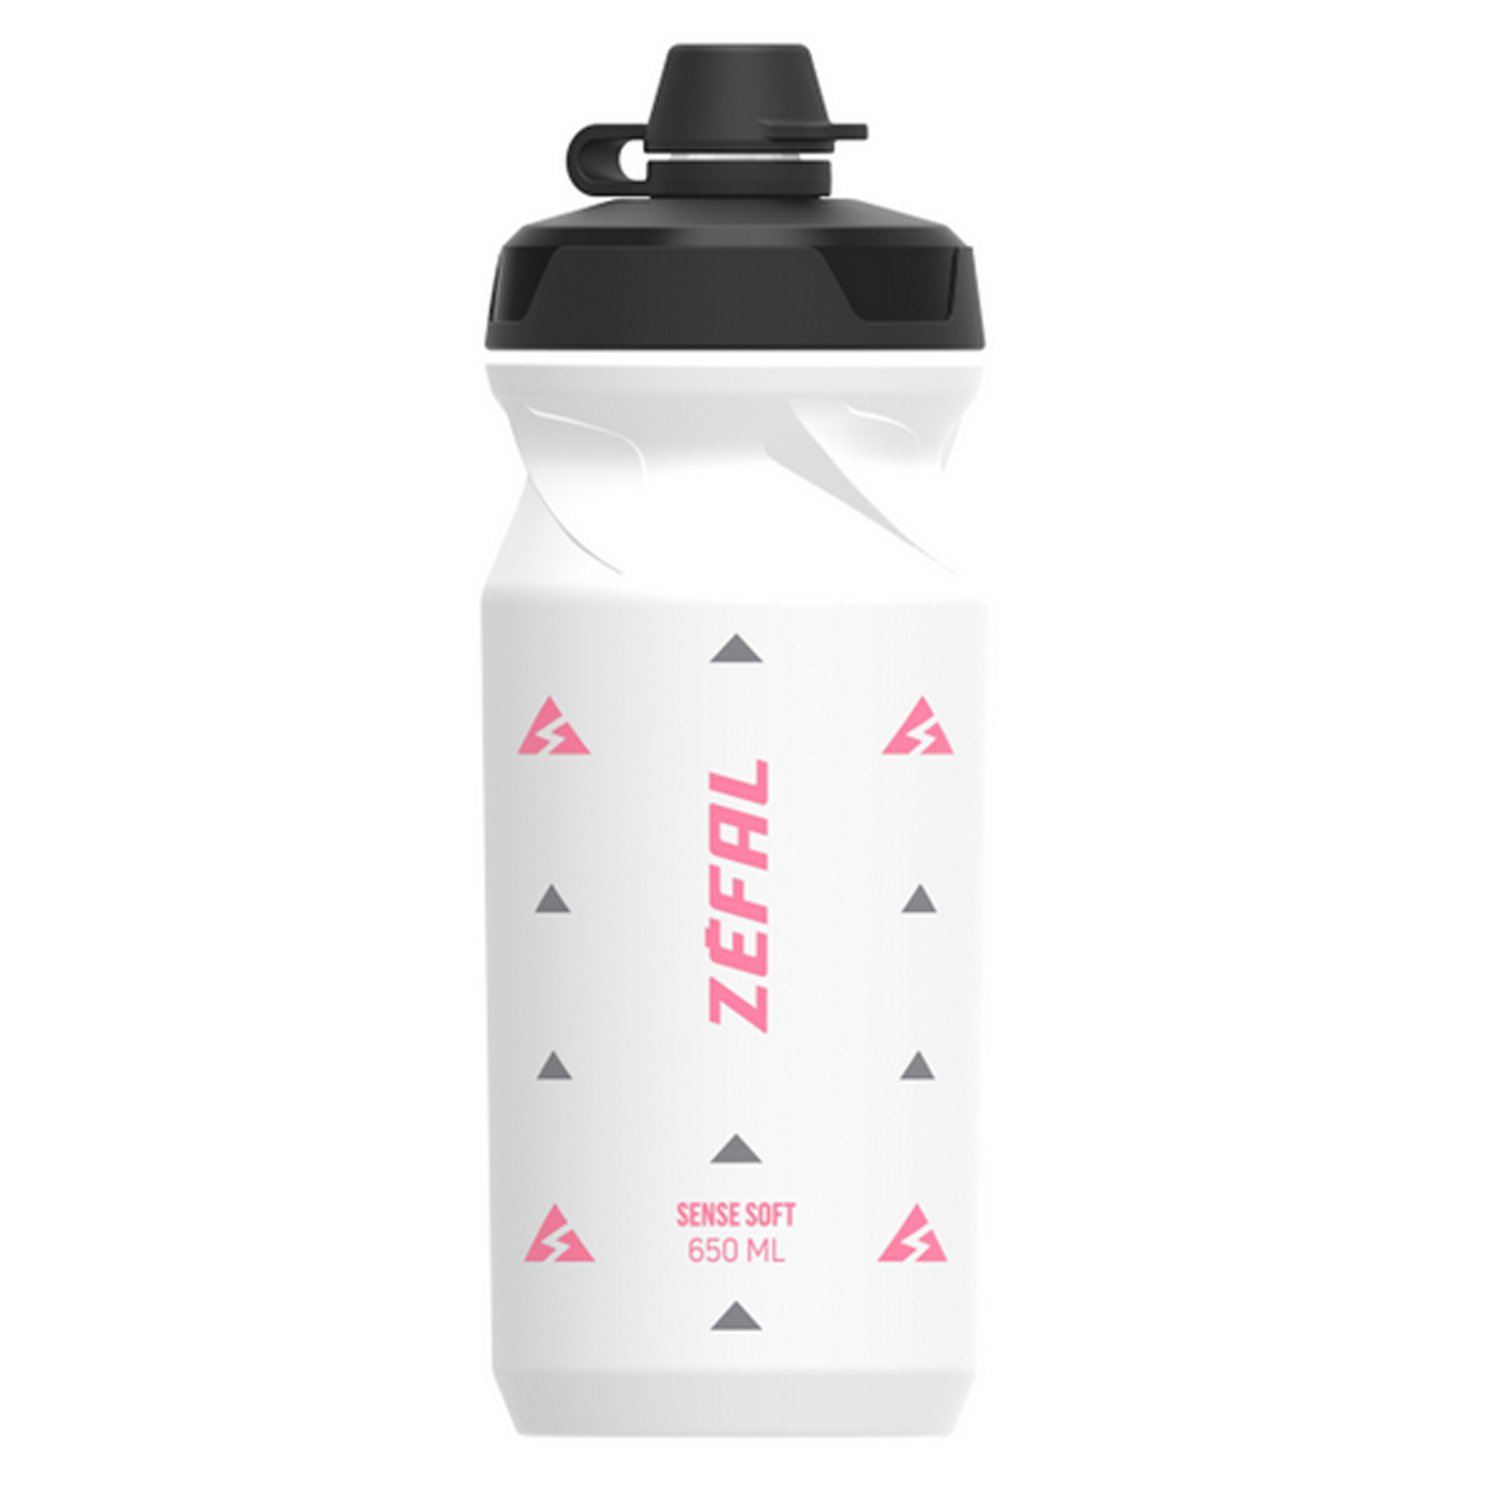 Фляга велосипедная Zefal Sense Soft 65 No-Mud Bottle, пластик, 650 мл, белый/розовый, 2023, 155R фляга велосипедная salewa bottles runner bottle 0 75 l red б р uni 2323 1600